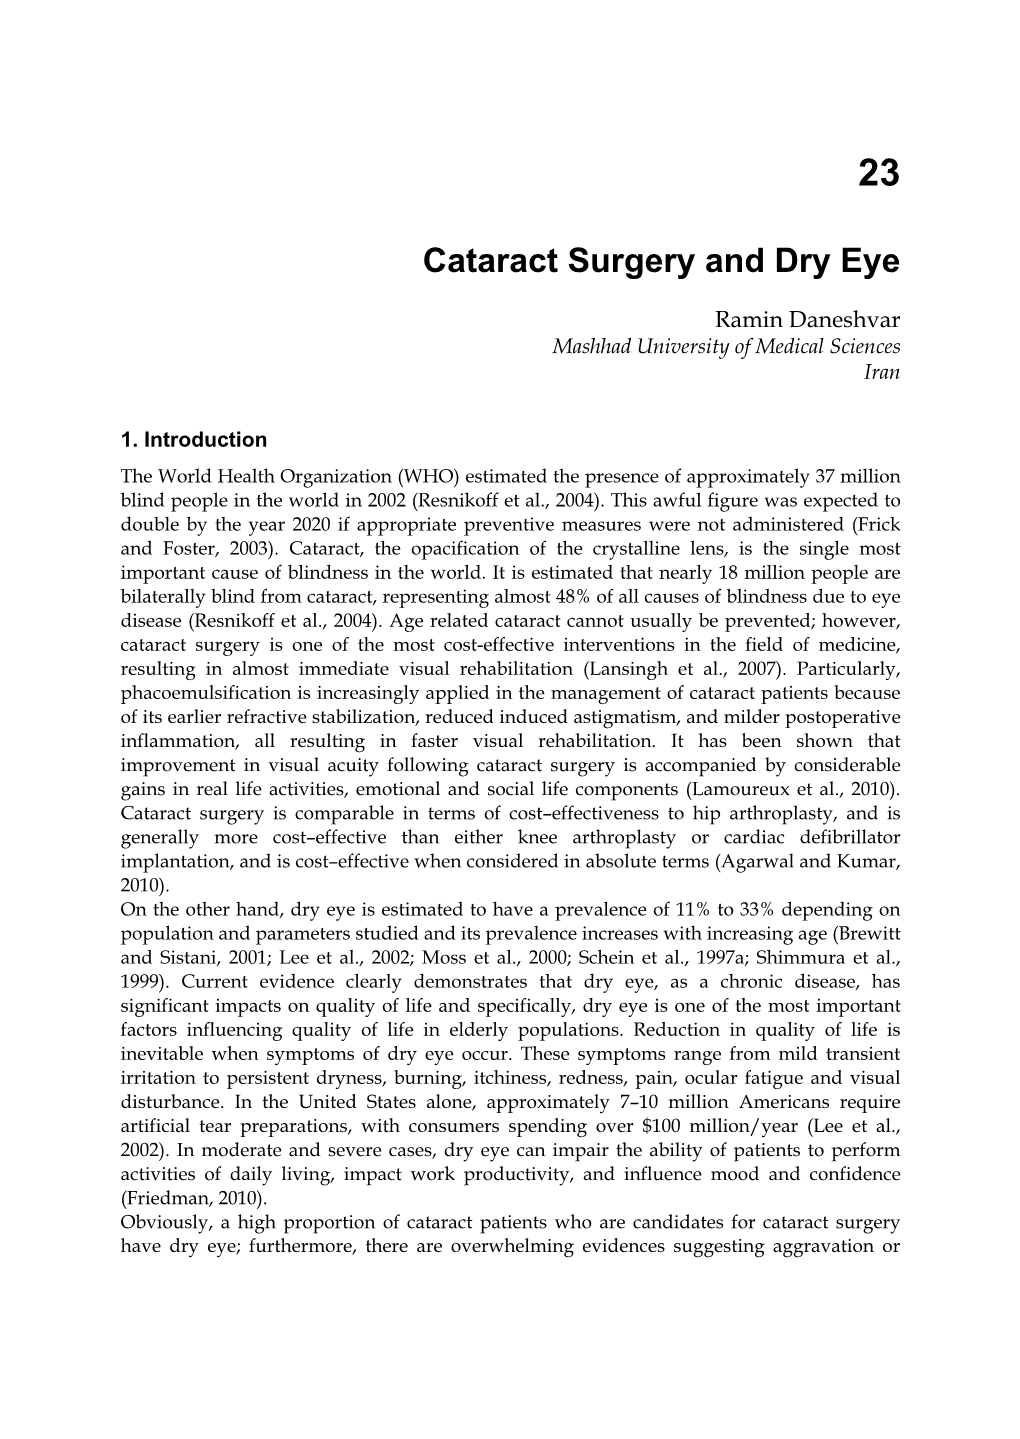 Cataract Surgery and Dry Eye